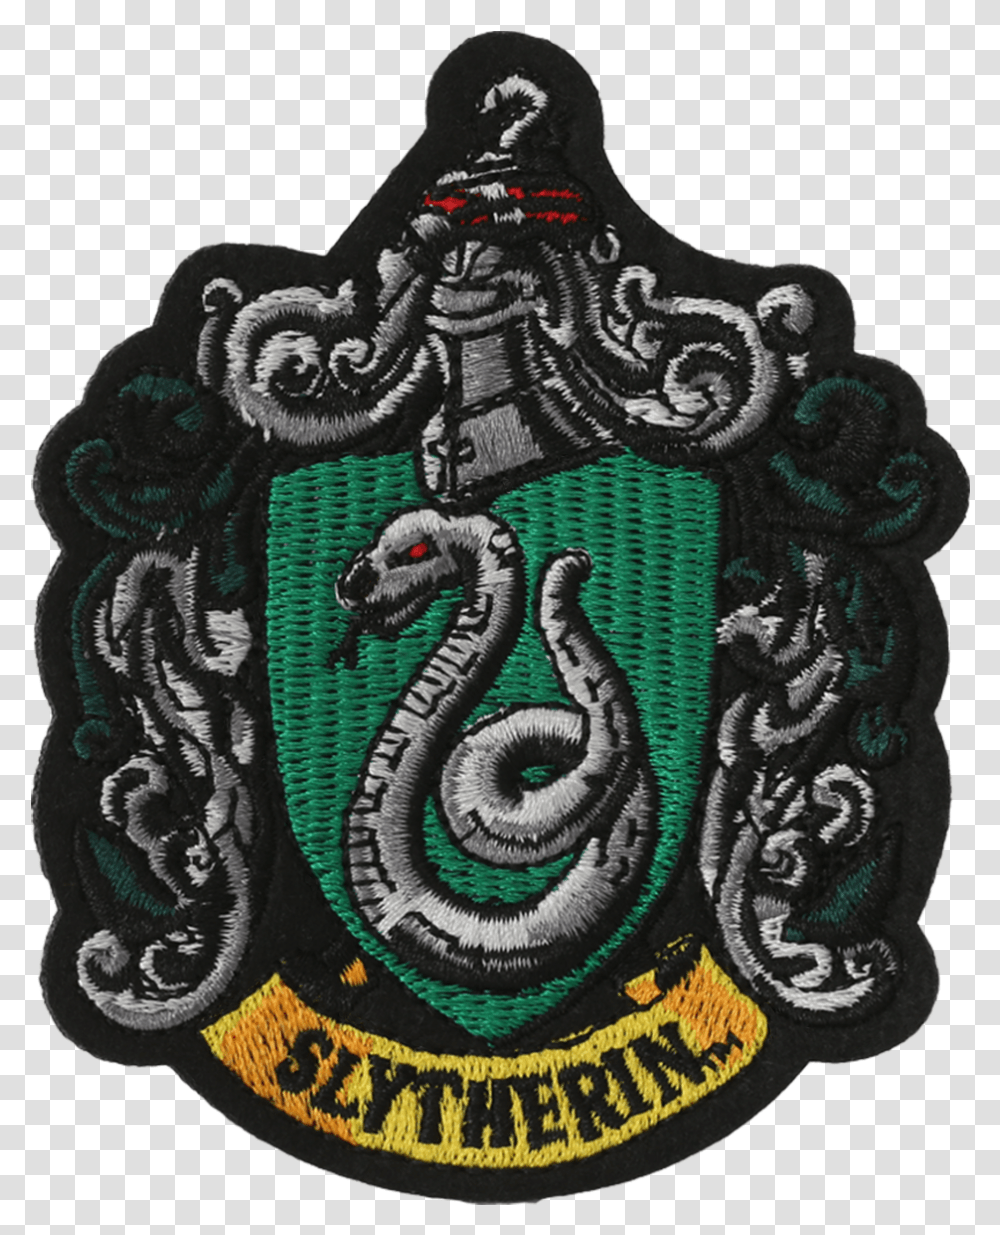 Harry Potter Slytherin Badge